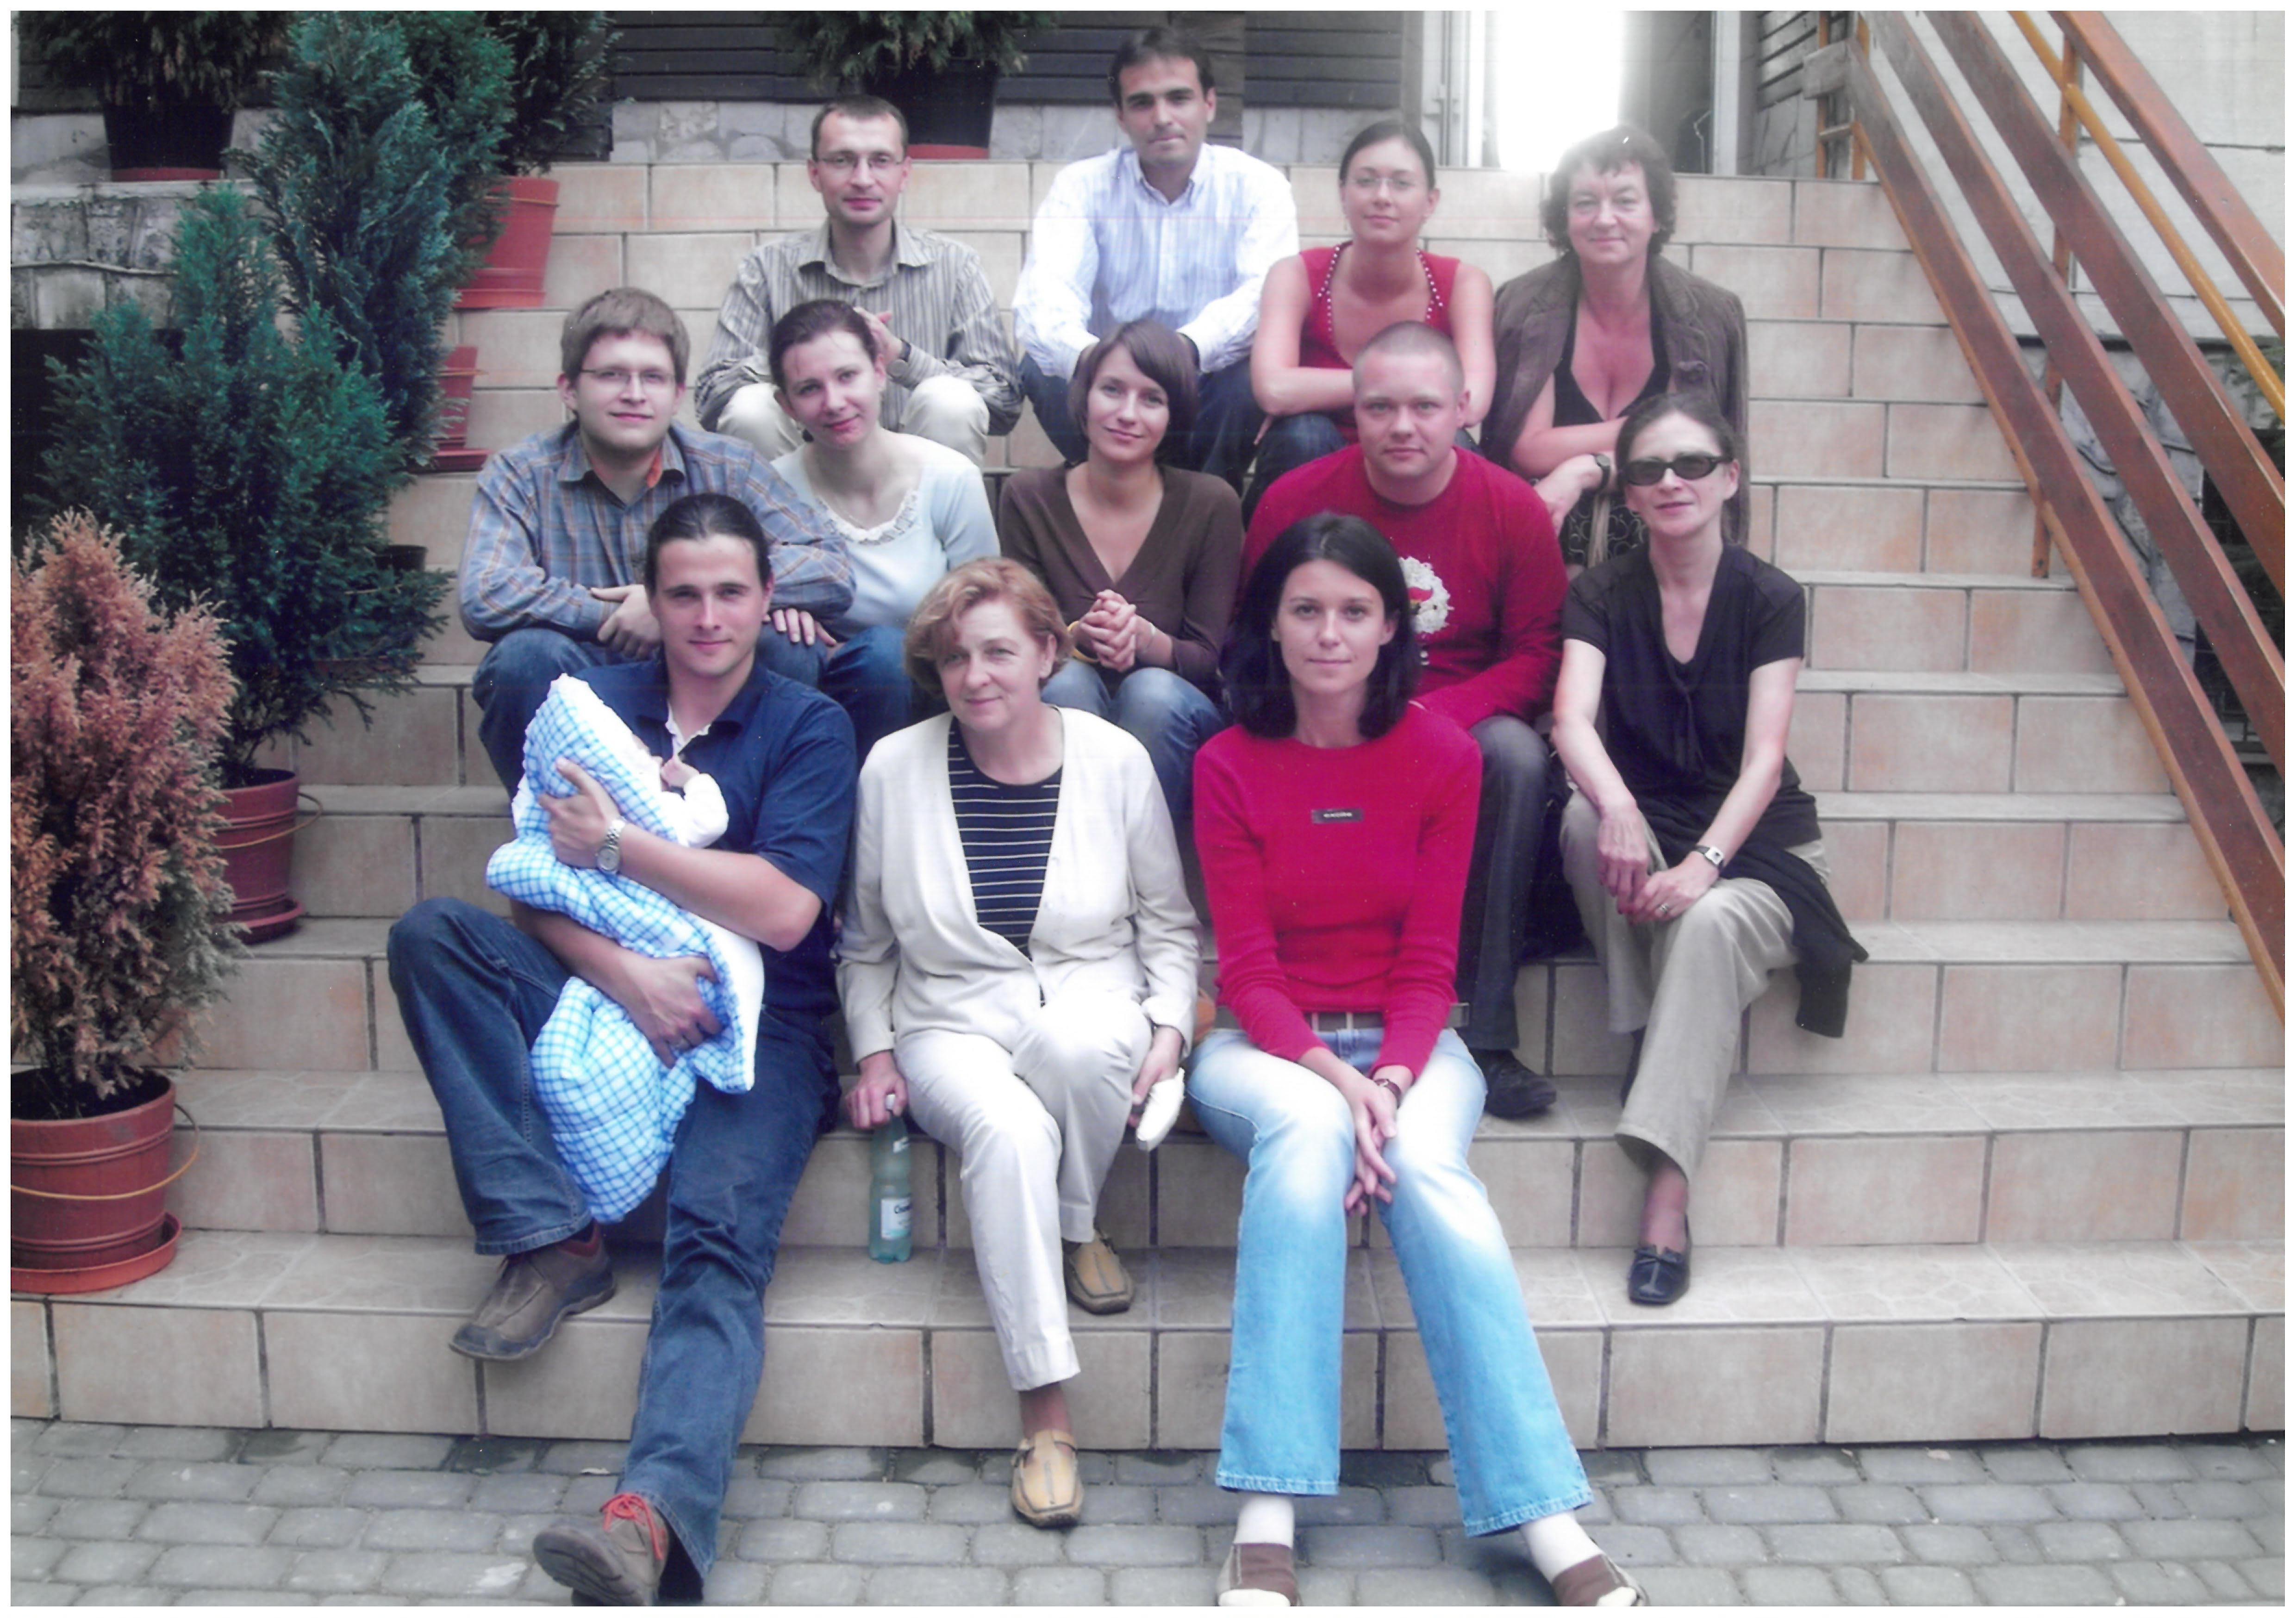 SWPS University's Department of Social Psychology in 2005